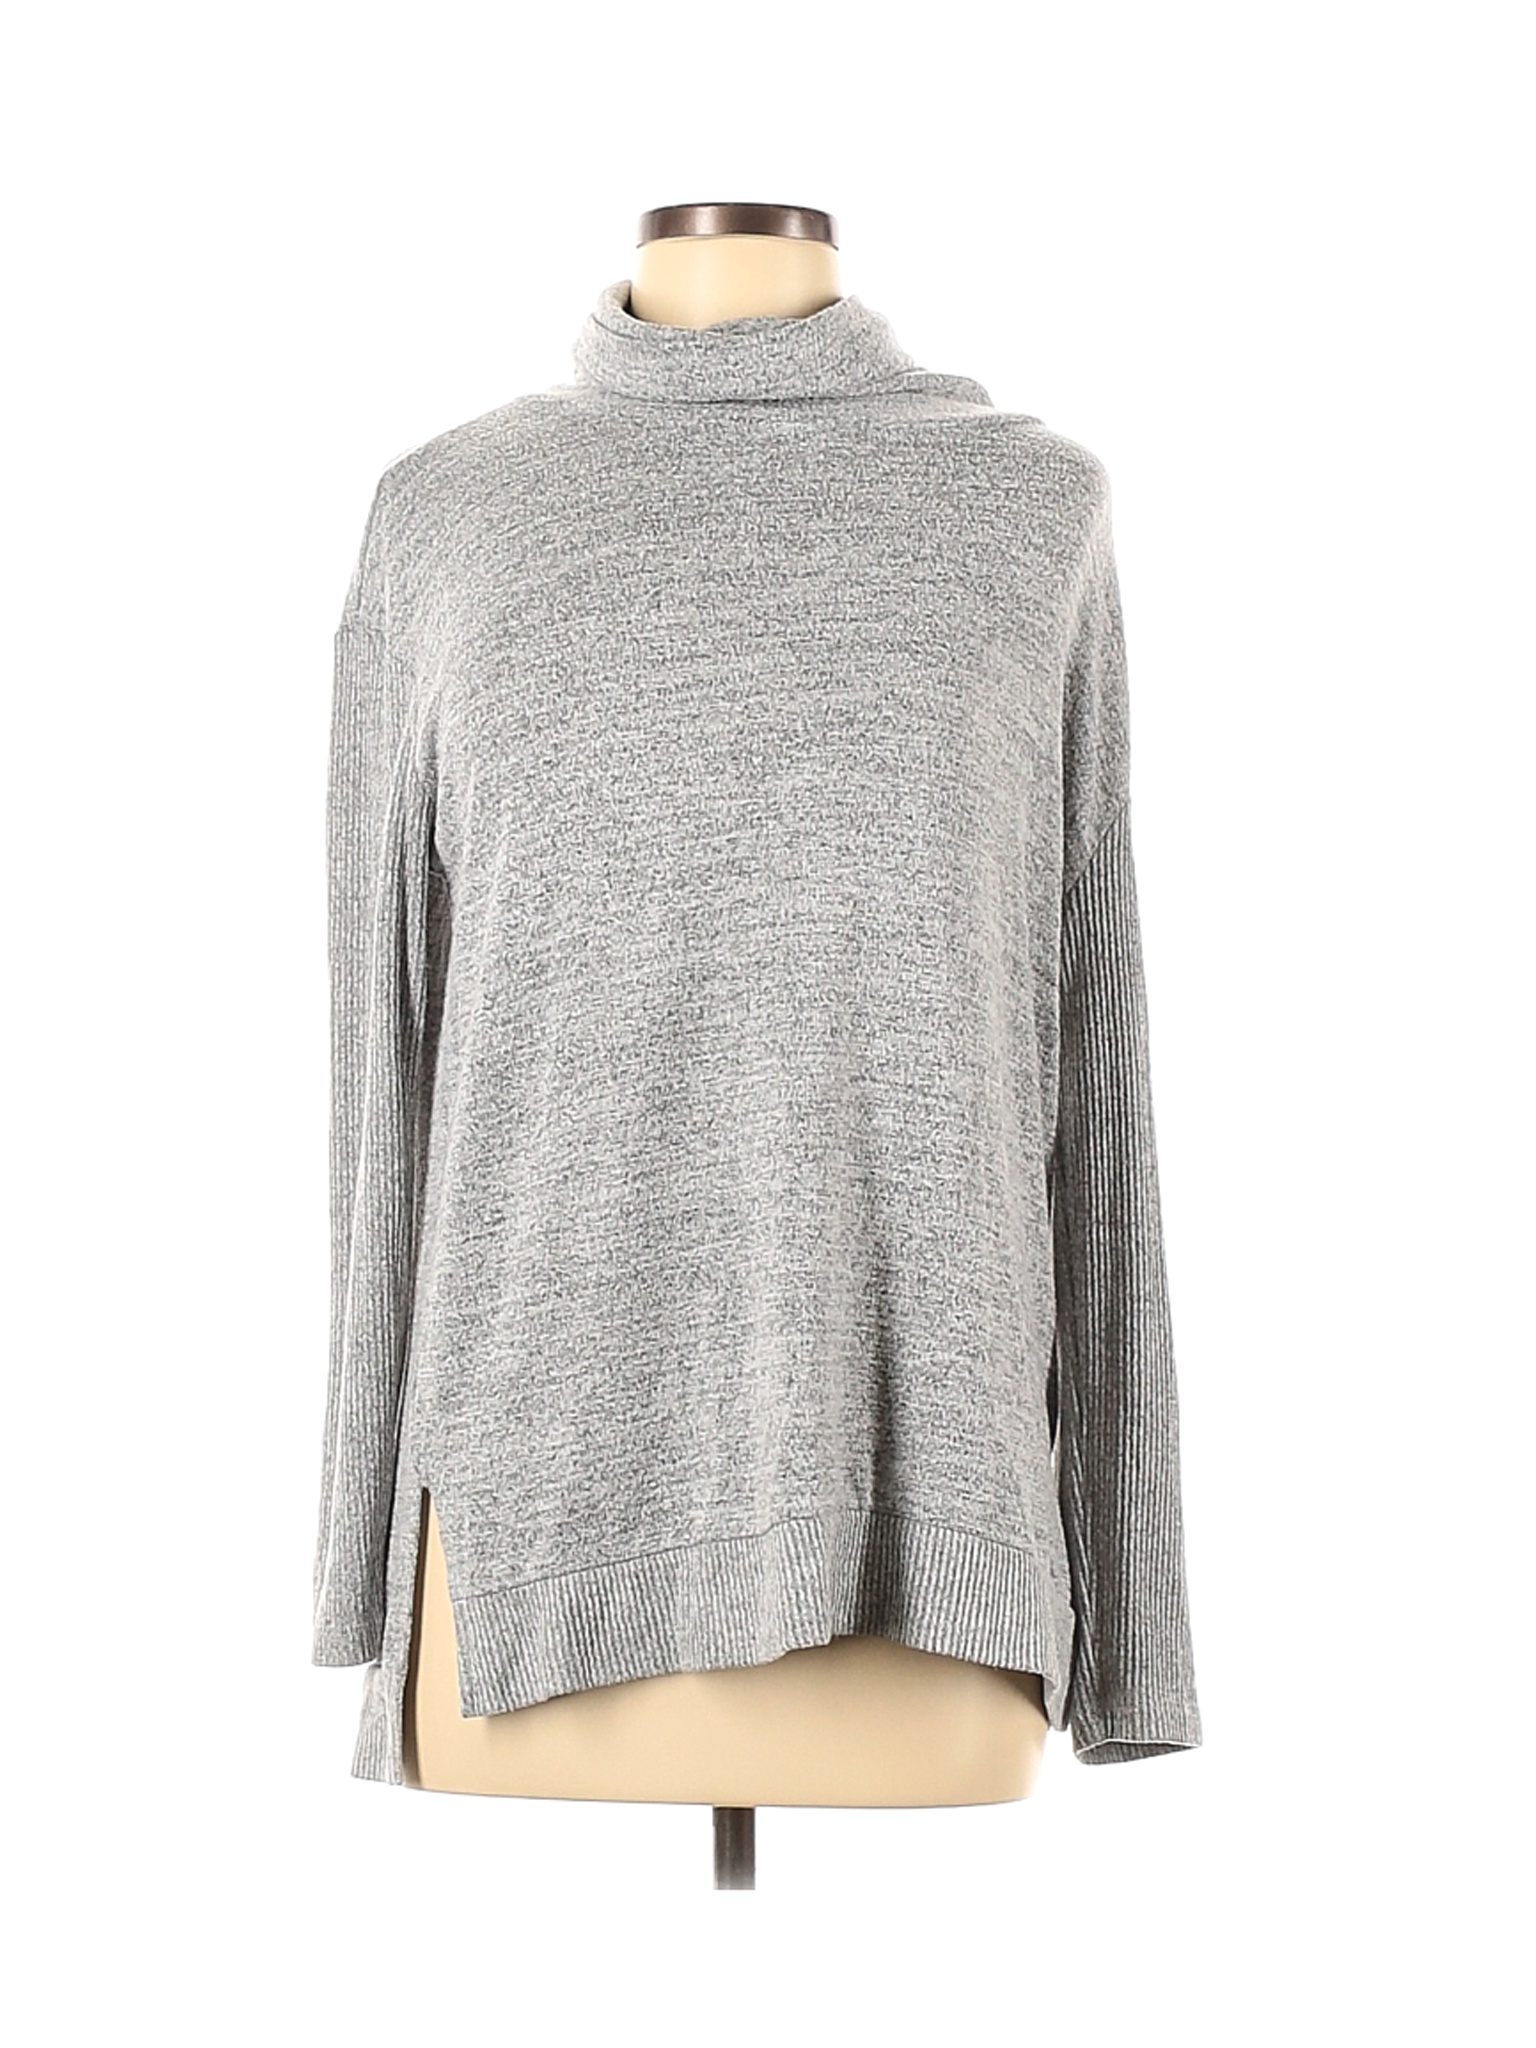 Sonoma Goods for Life Women Gray Pullover Sweater M | eBay